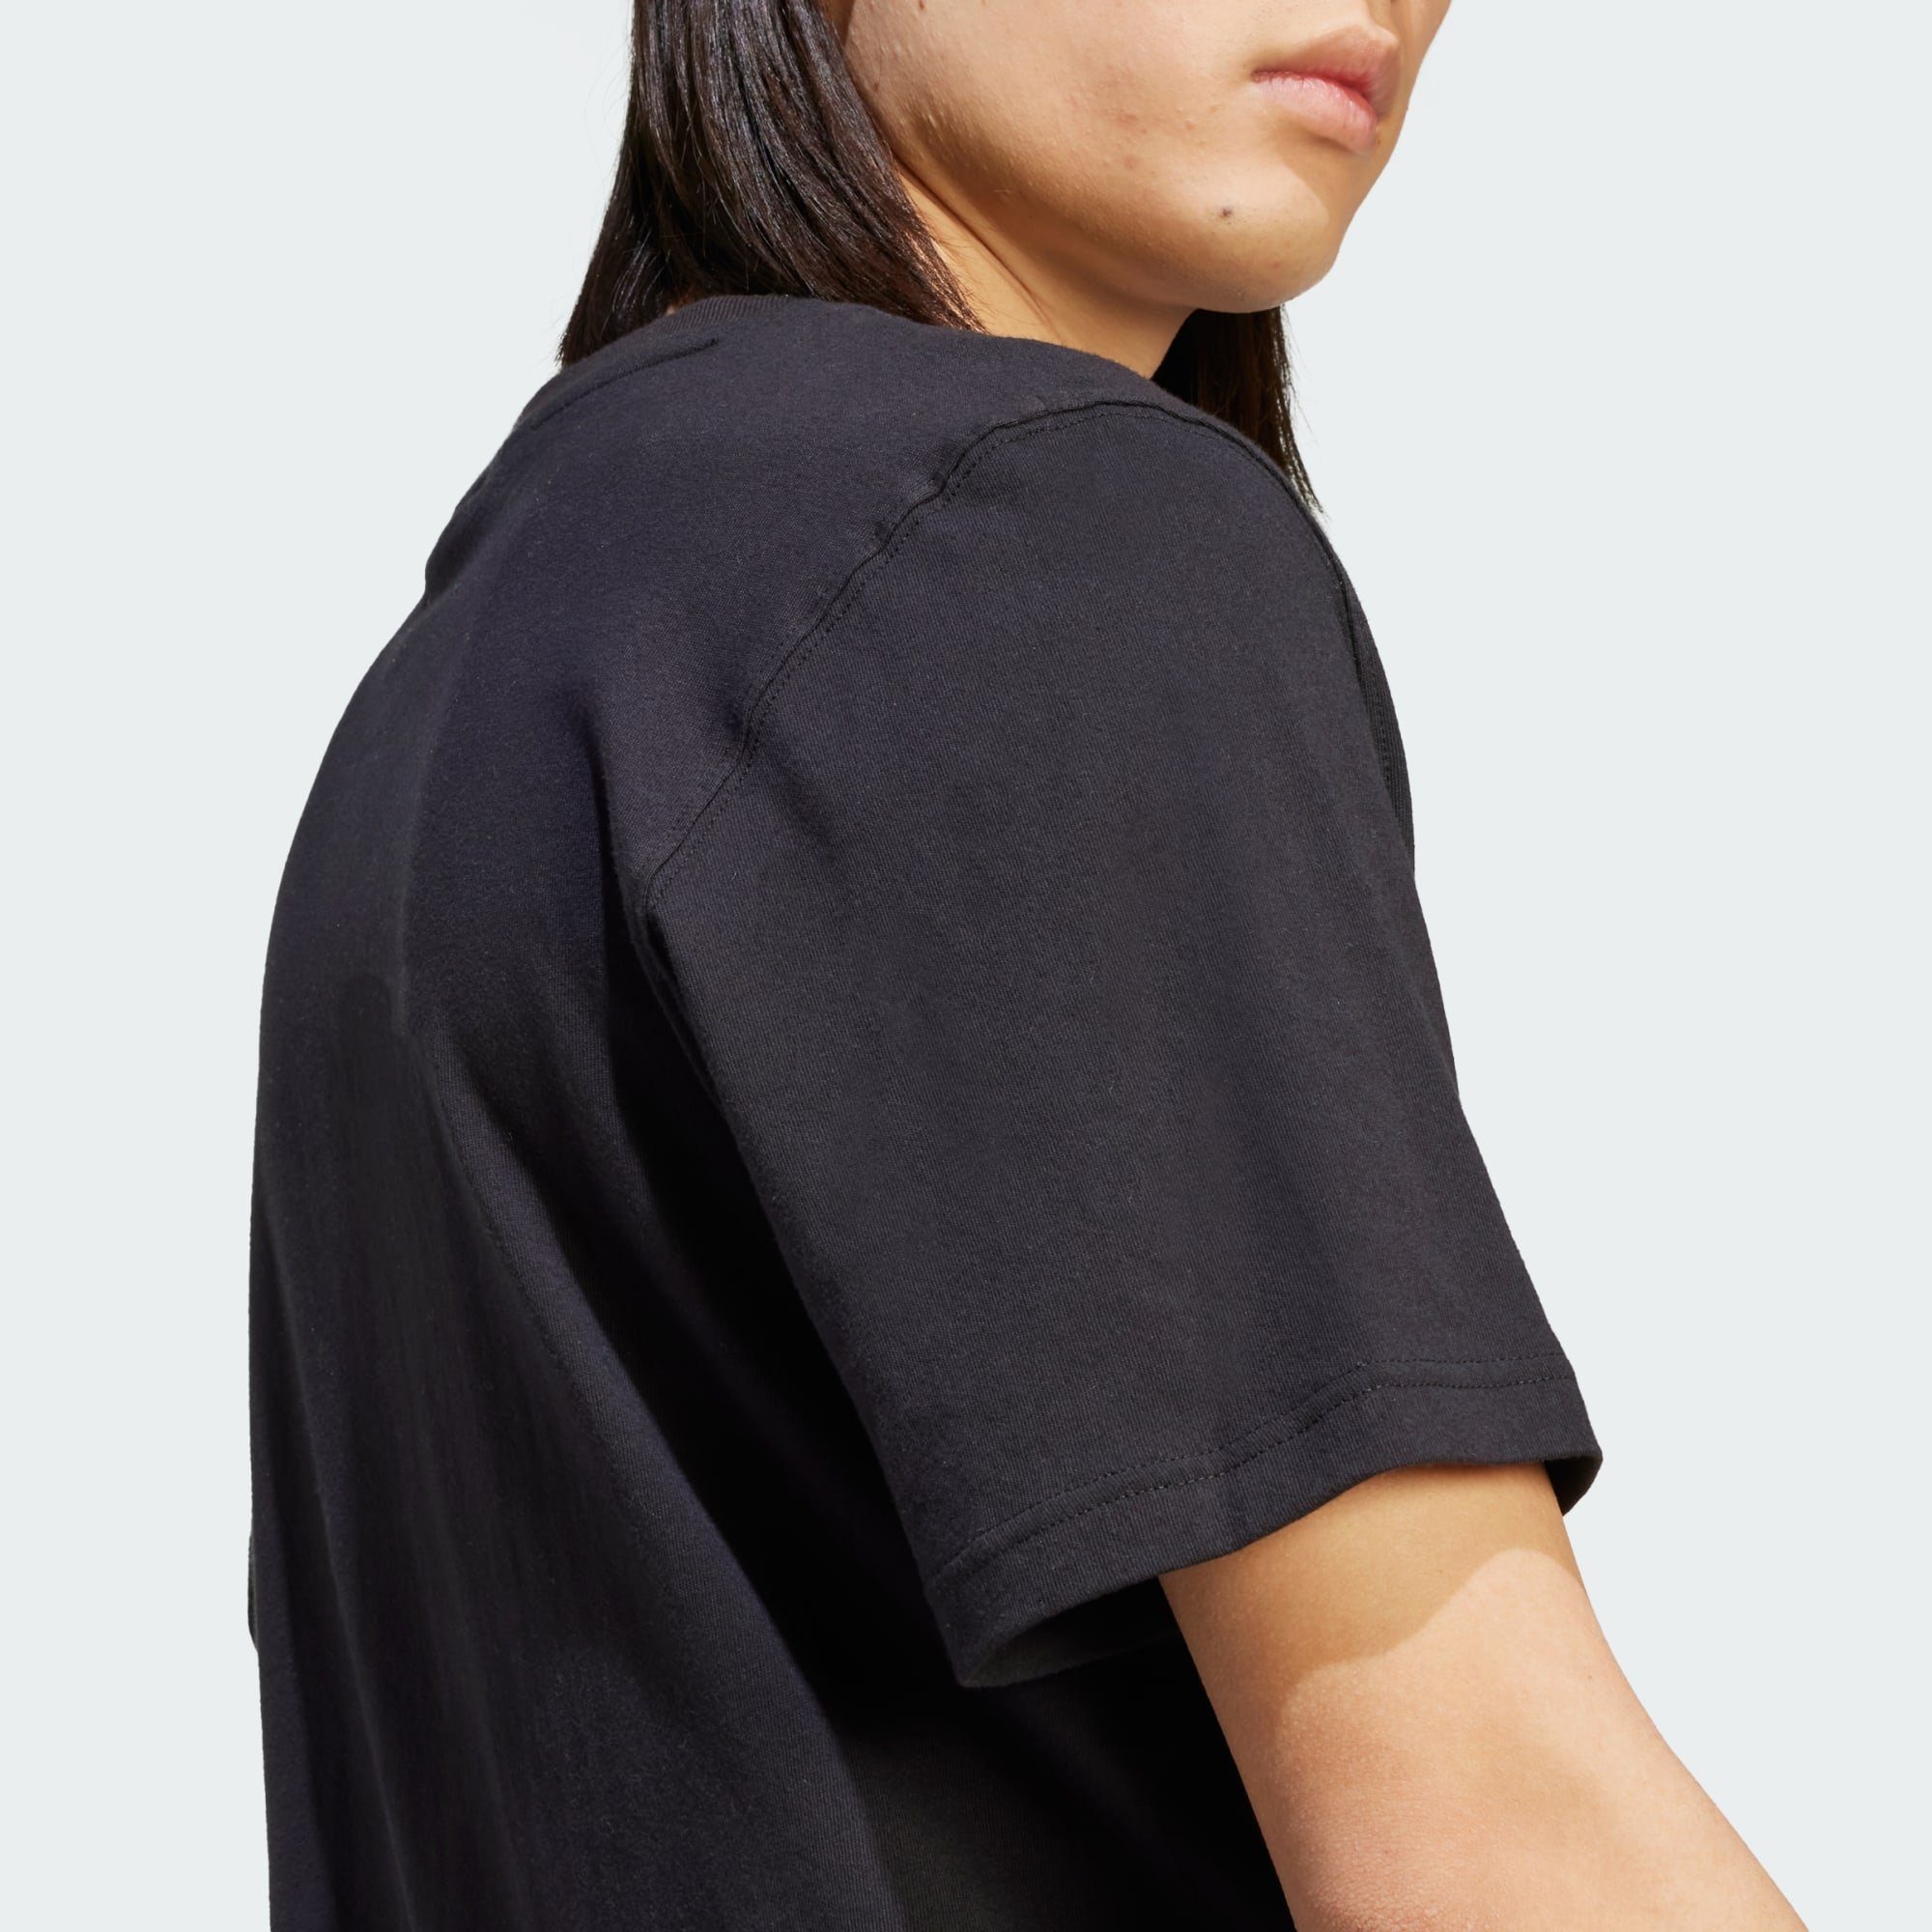 Black adidas ESSENTIALS White T-SHIRT T-Shirt / Originals TREFOIL